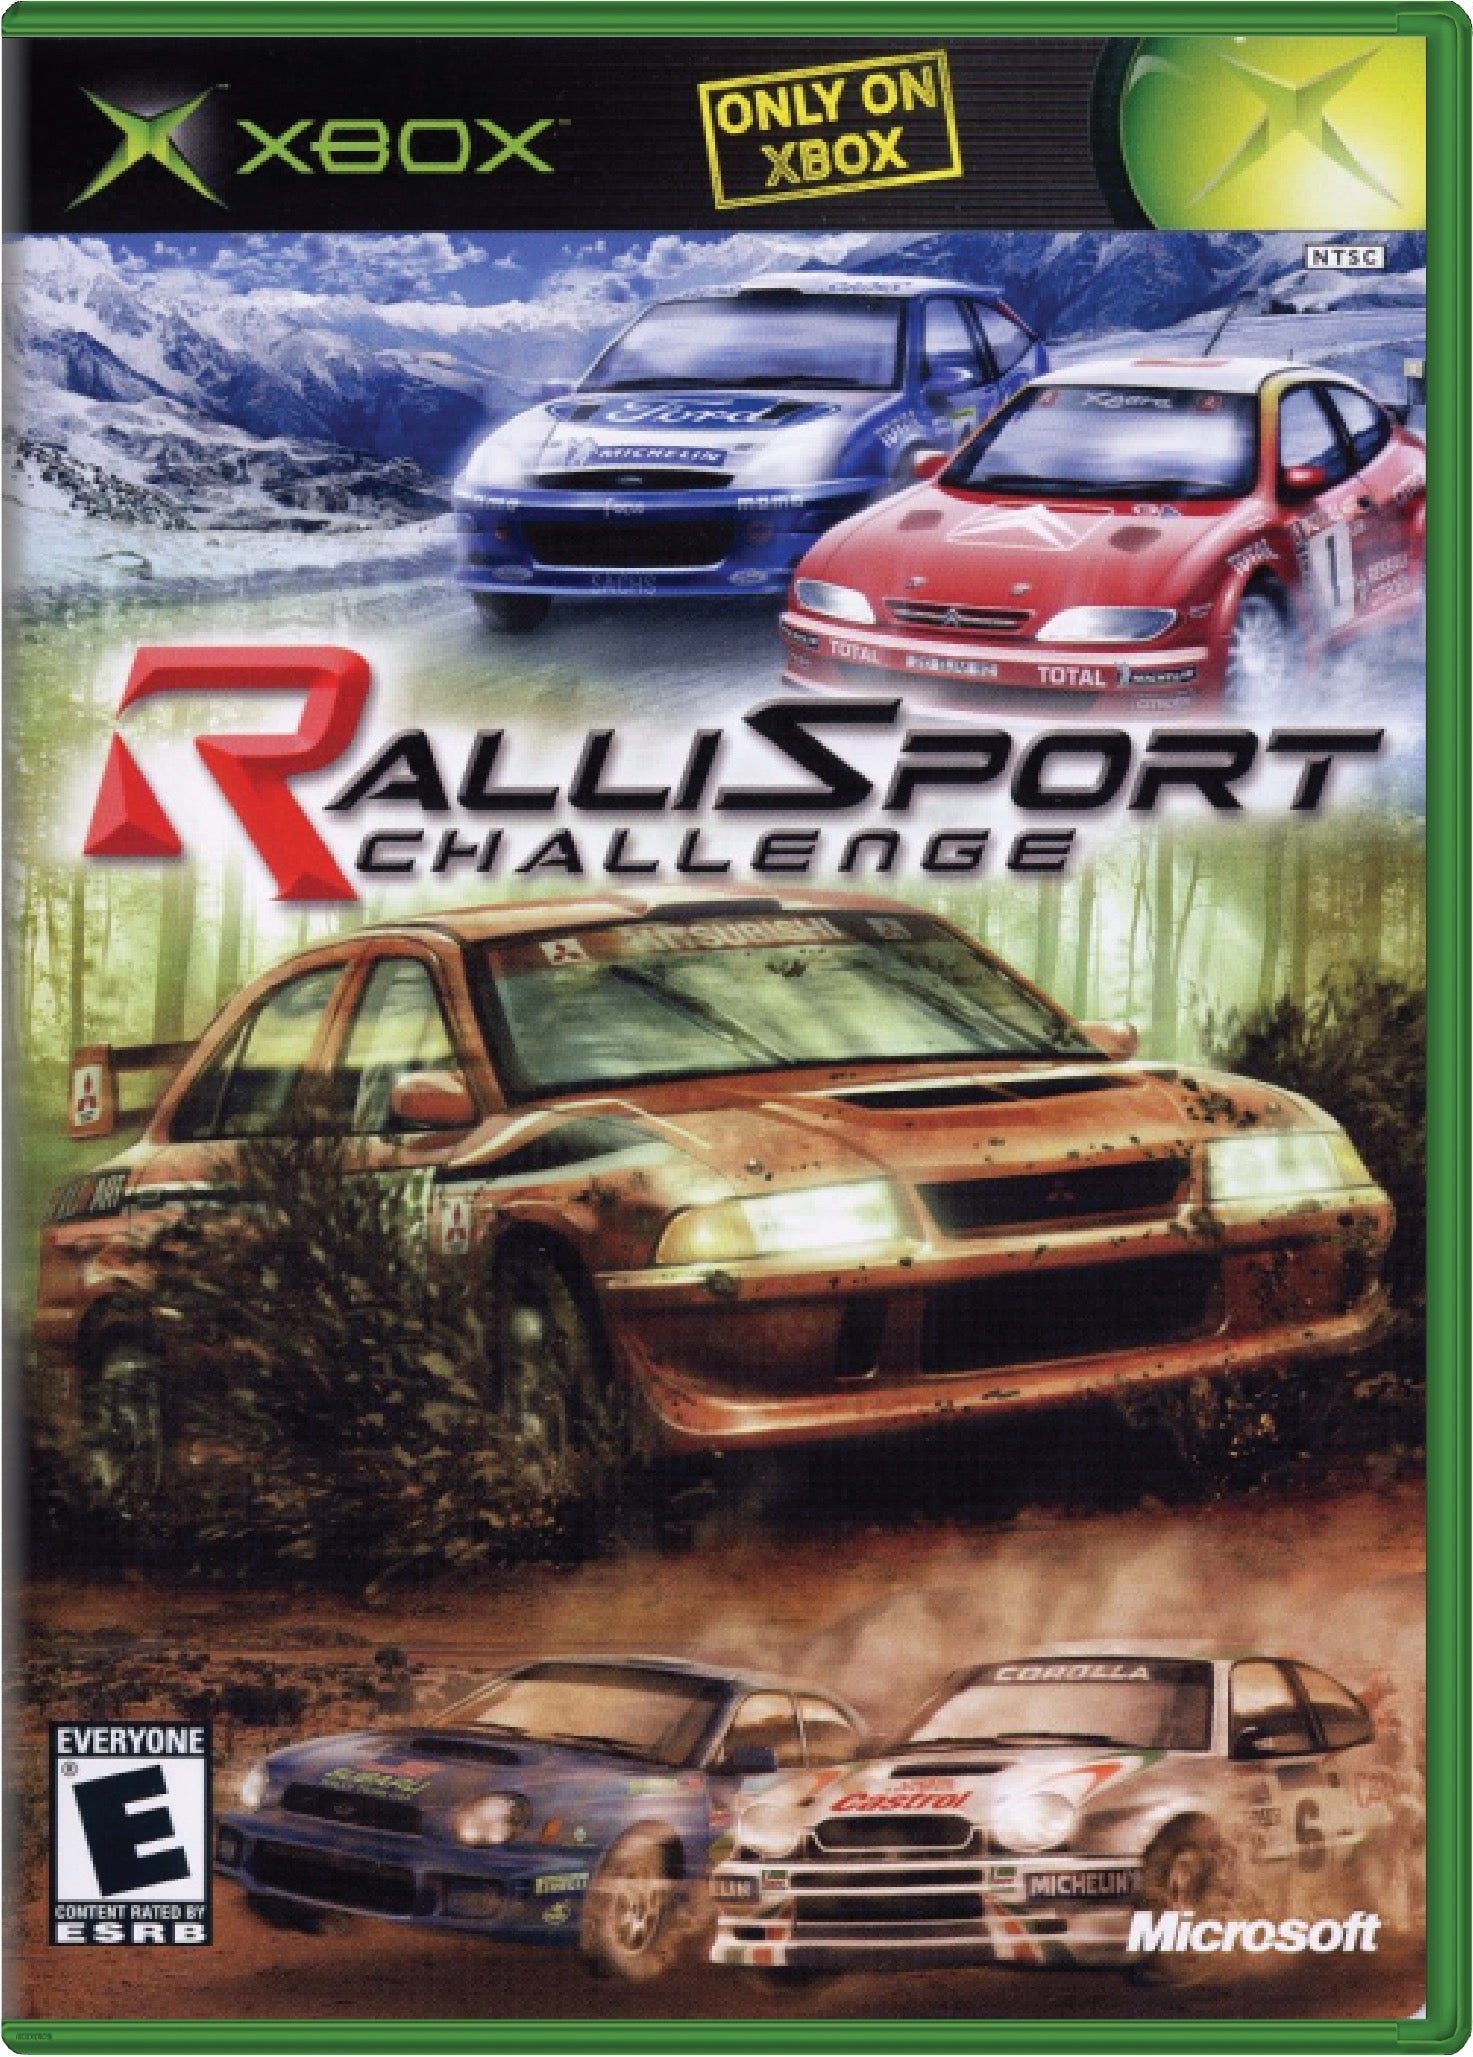 Ralli Sport Challenge Cover Art